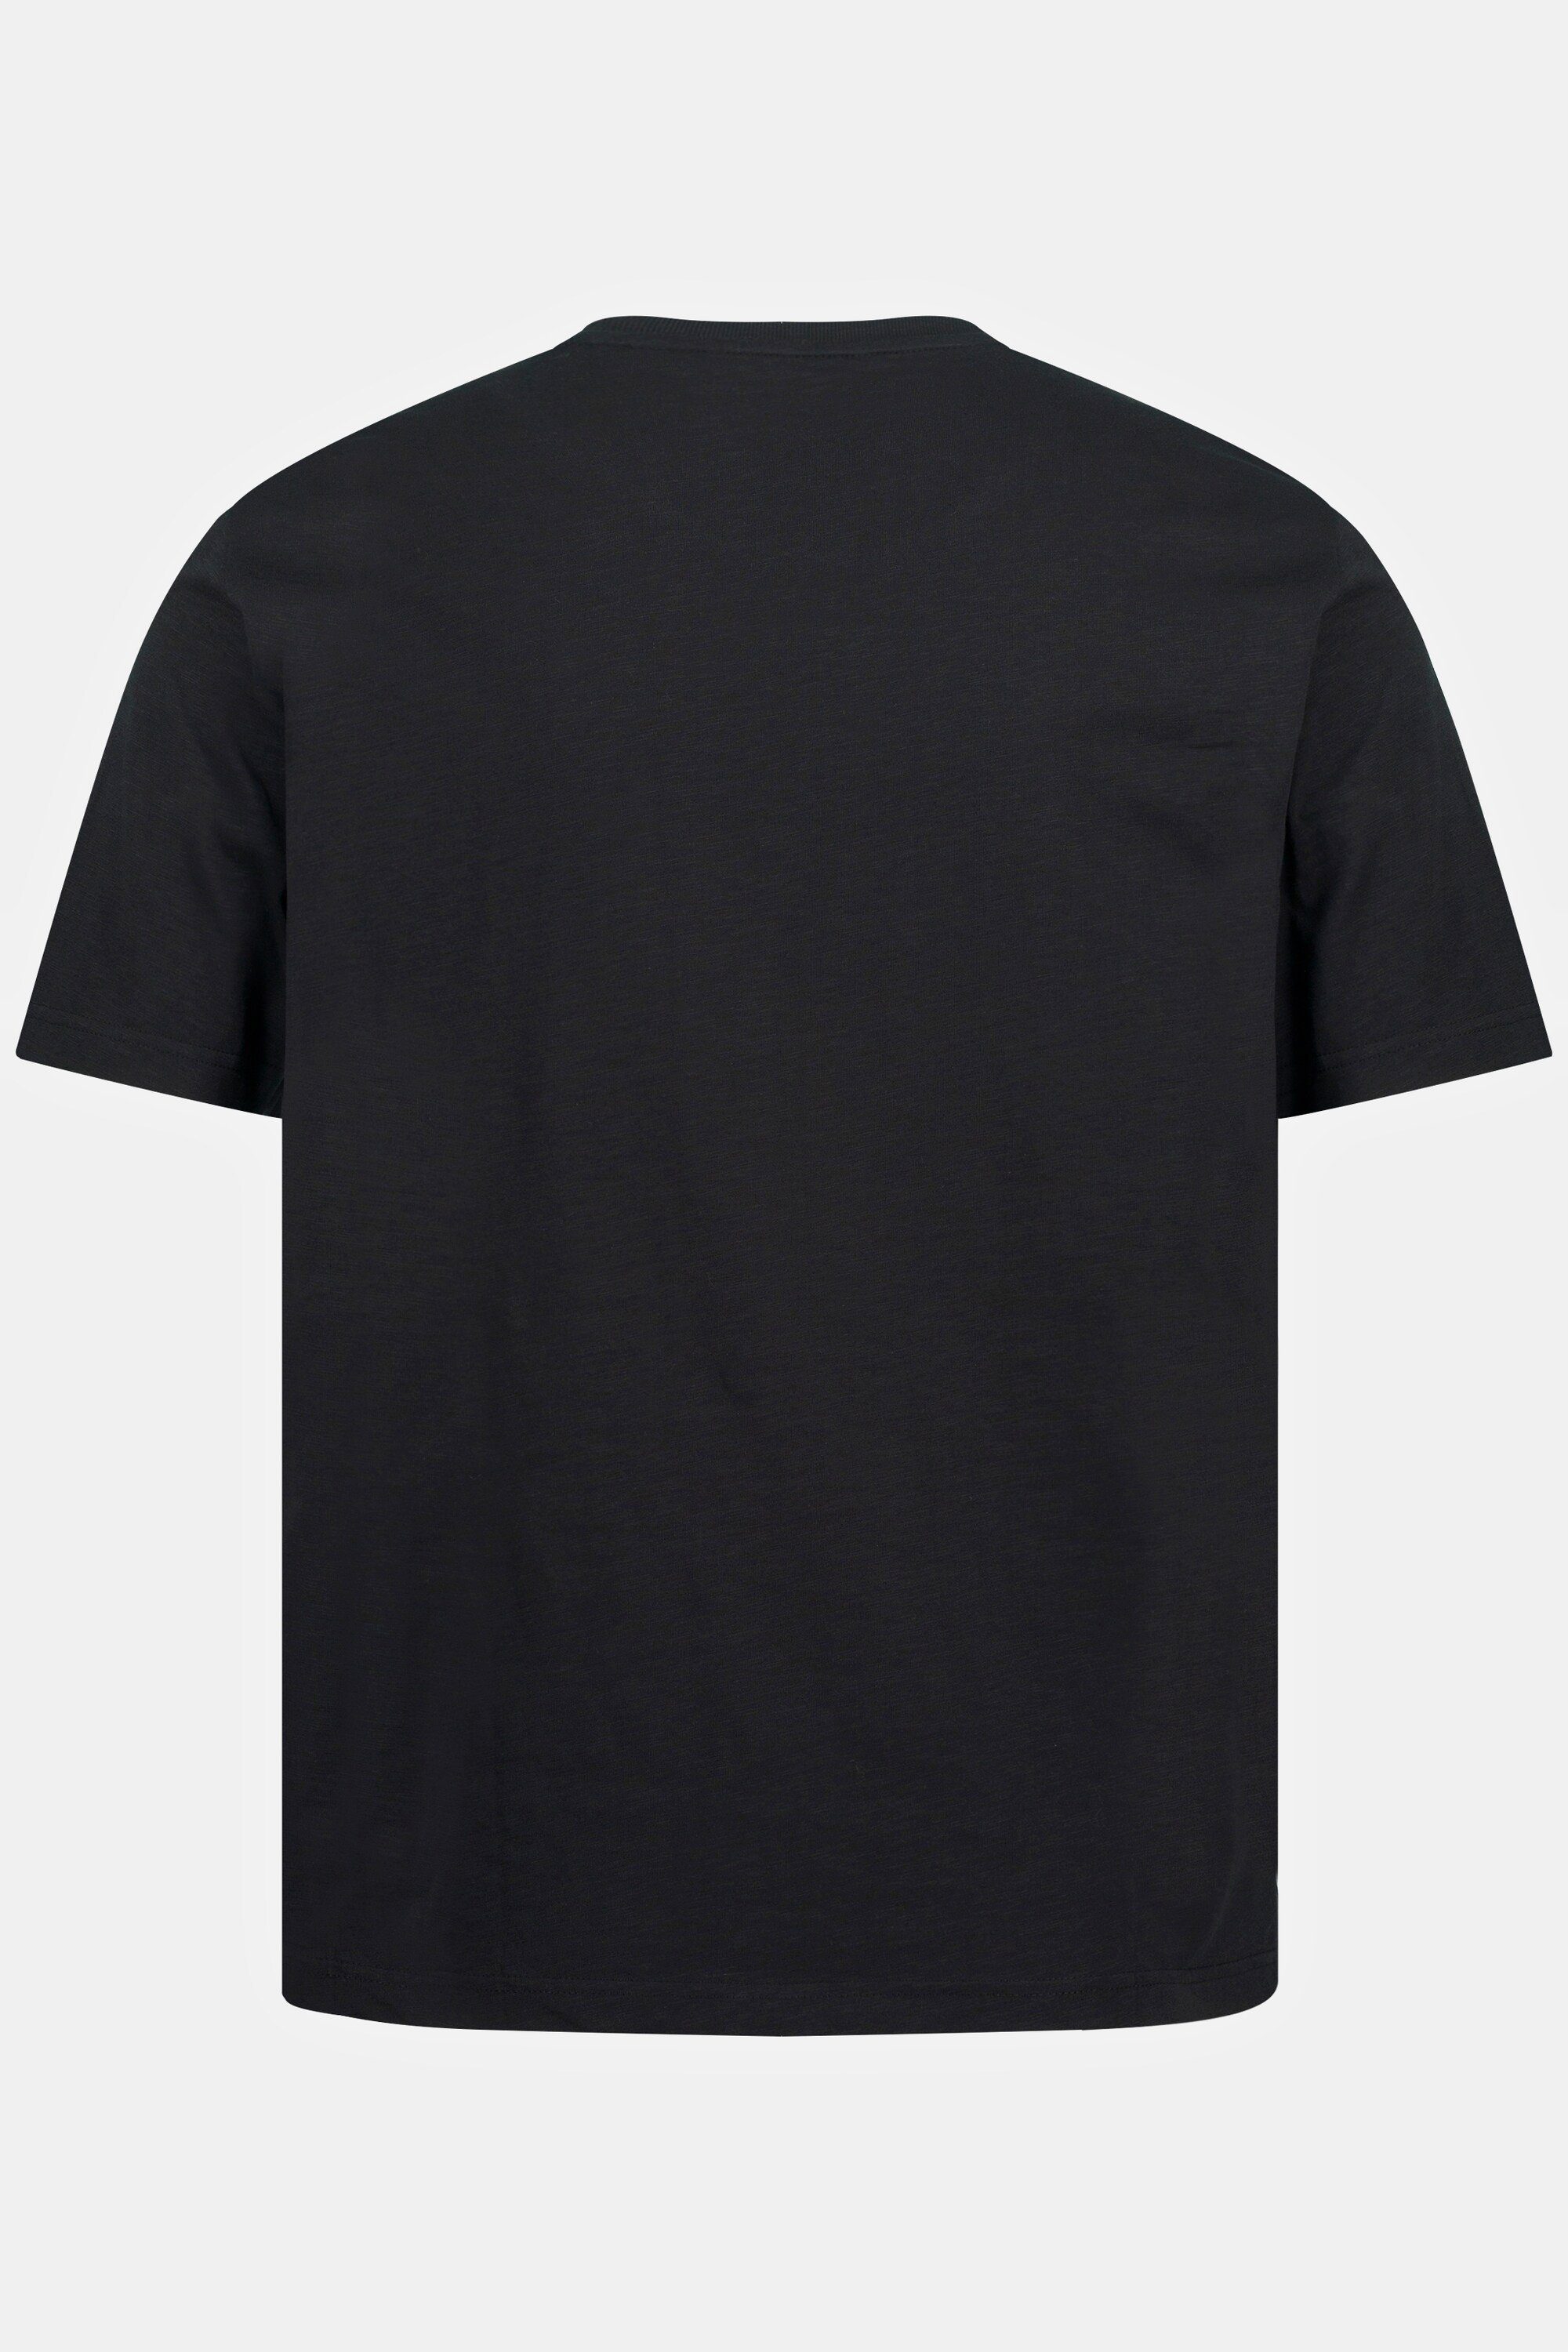 JP1880 T-Shirt Halbarm T-Shirt Print Rundhals